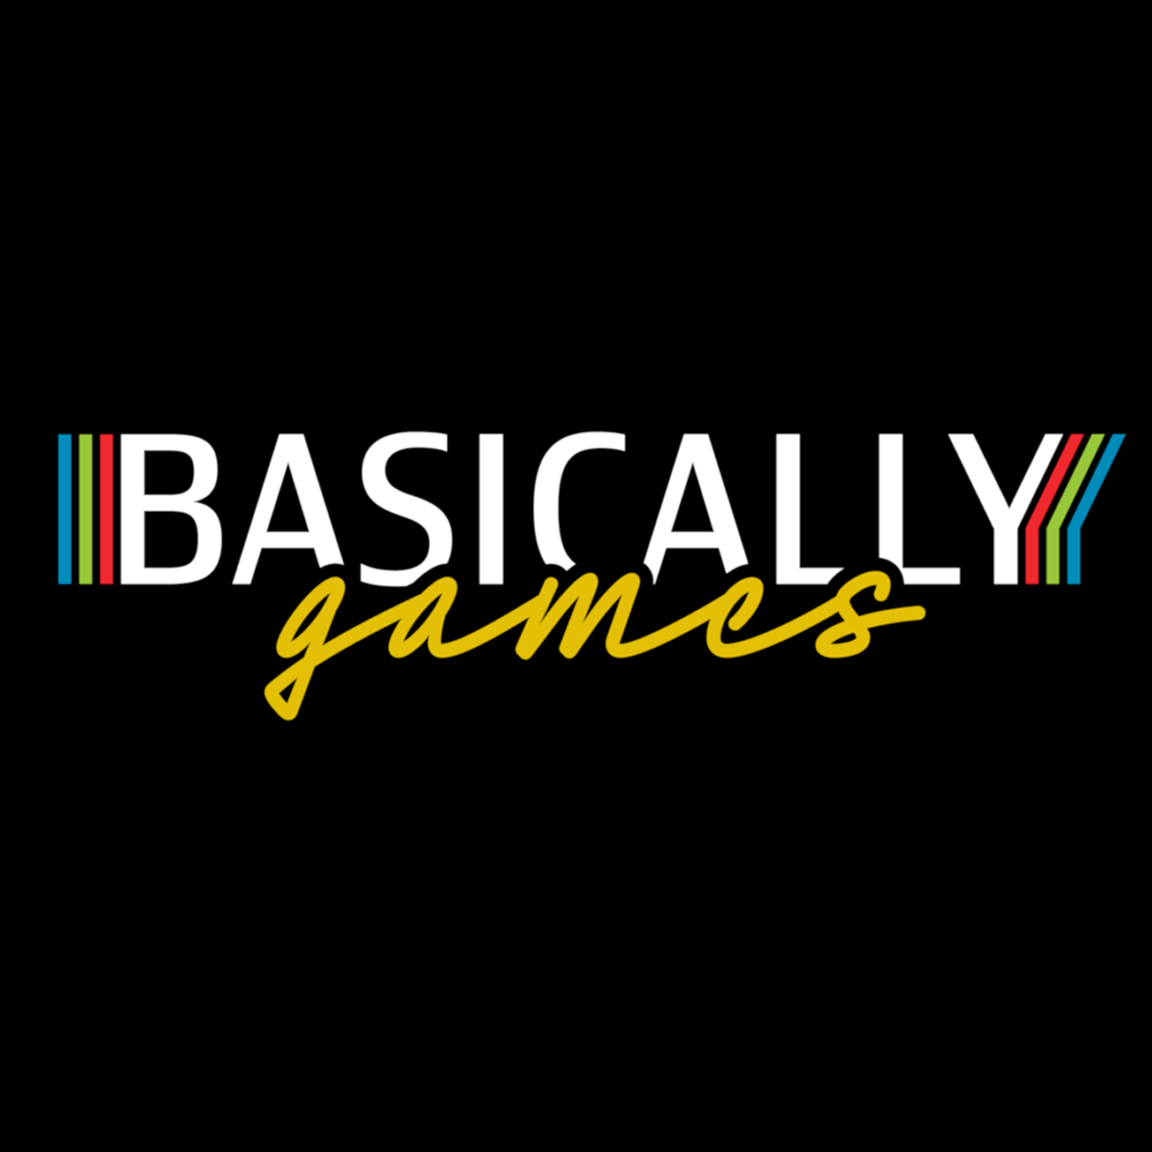 Baldi Basics Kickstarter Exclusive Demo - release date, videos